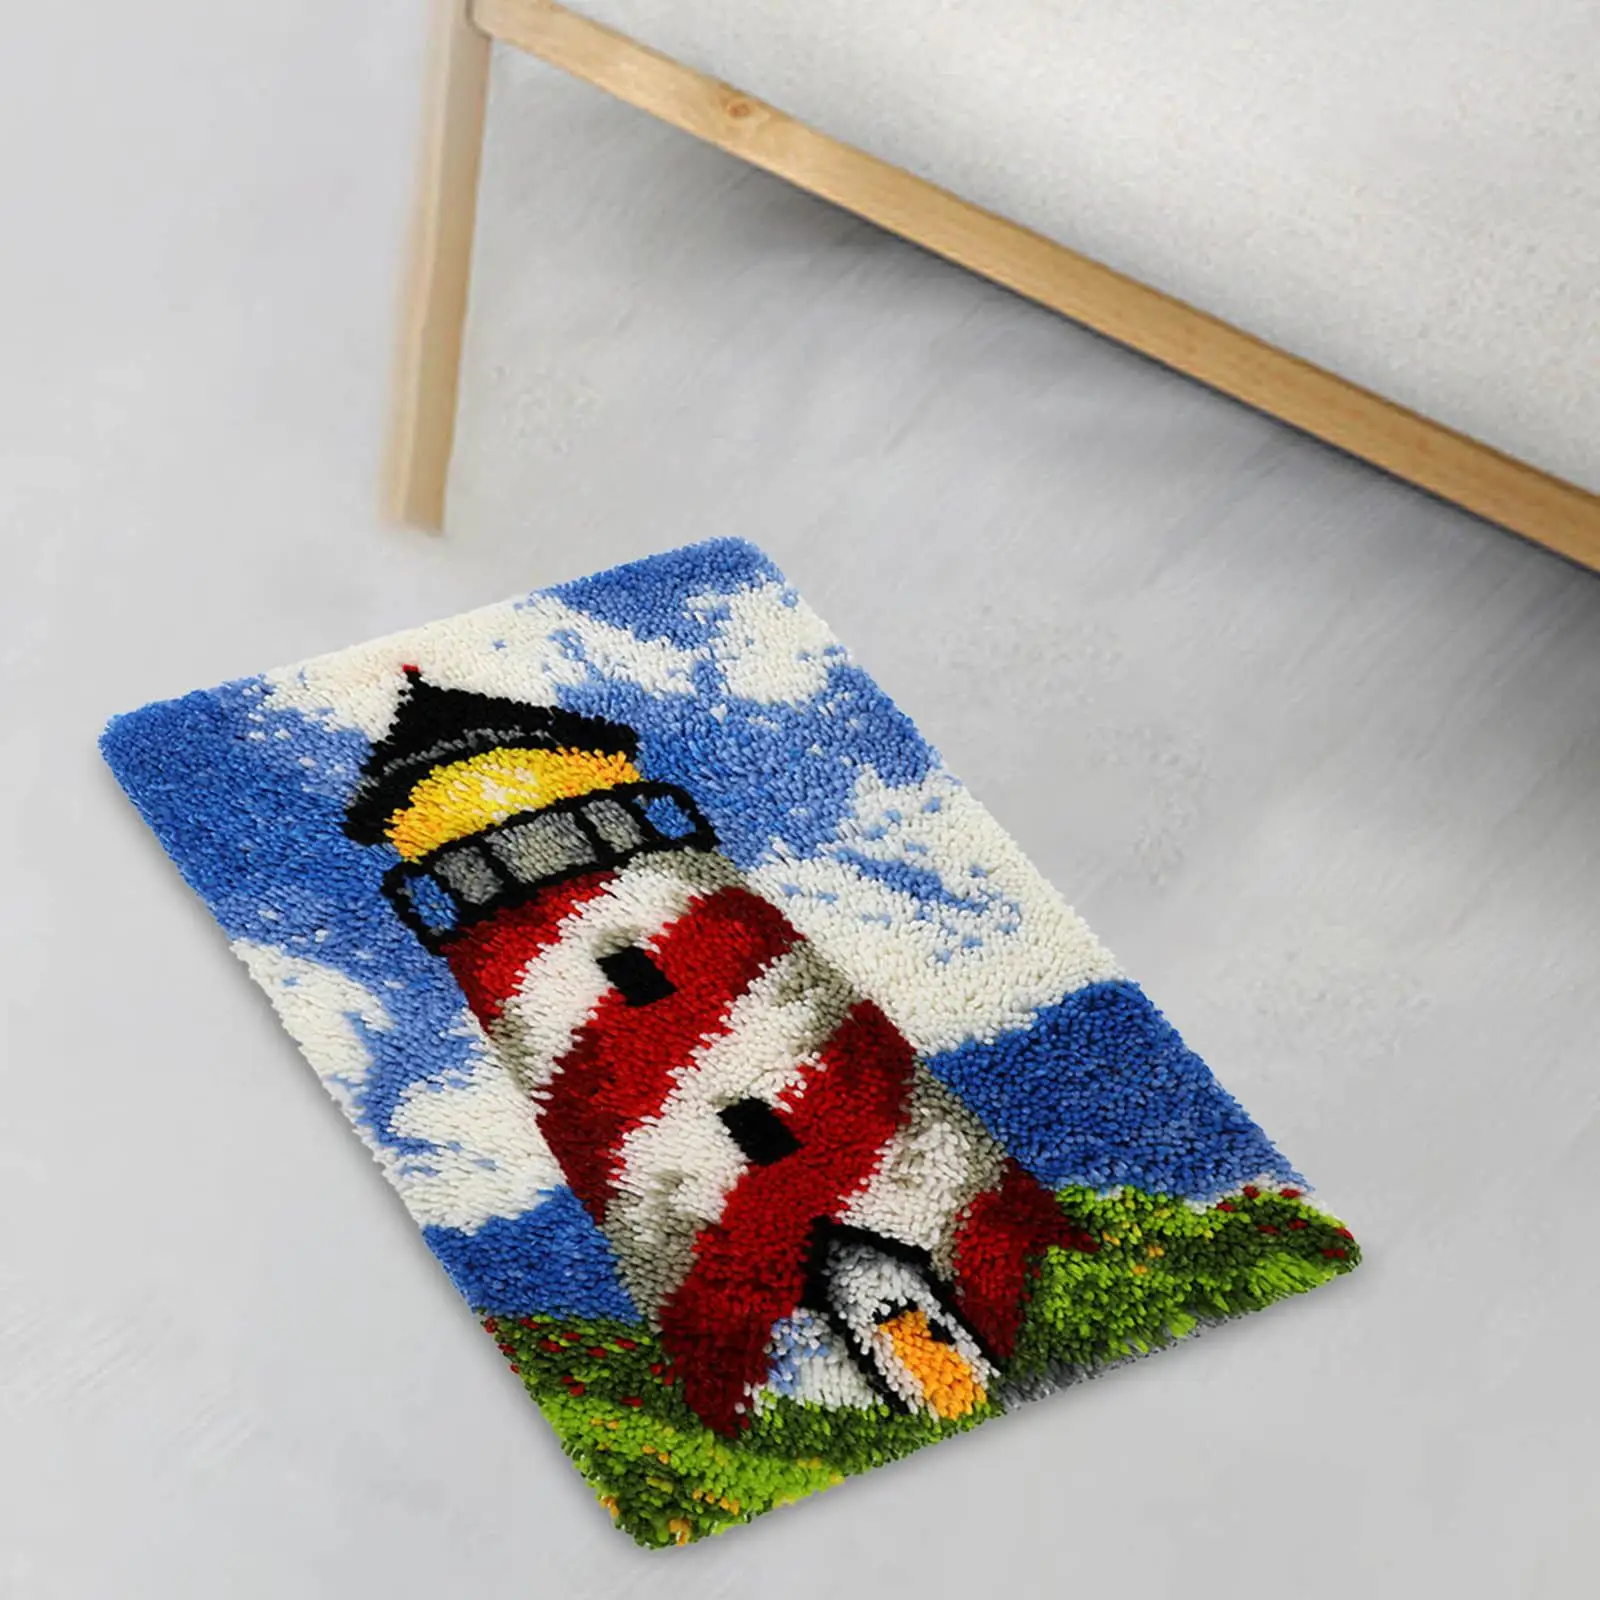 Latch DIY Rug Making Kit Embroidery Handmade Carpet Set for Home Decor Carpet Adults